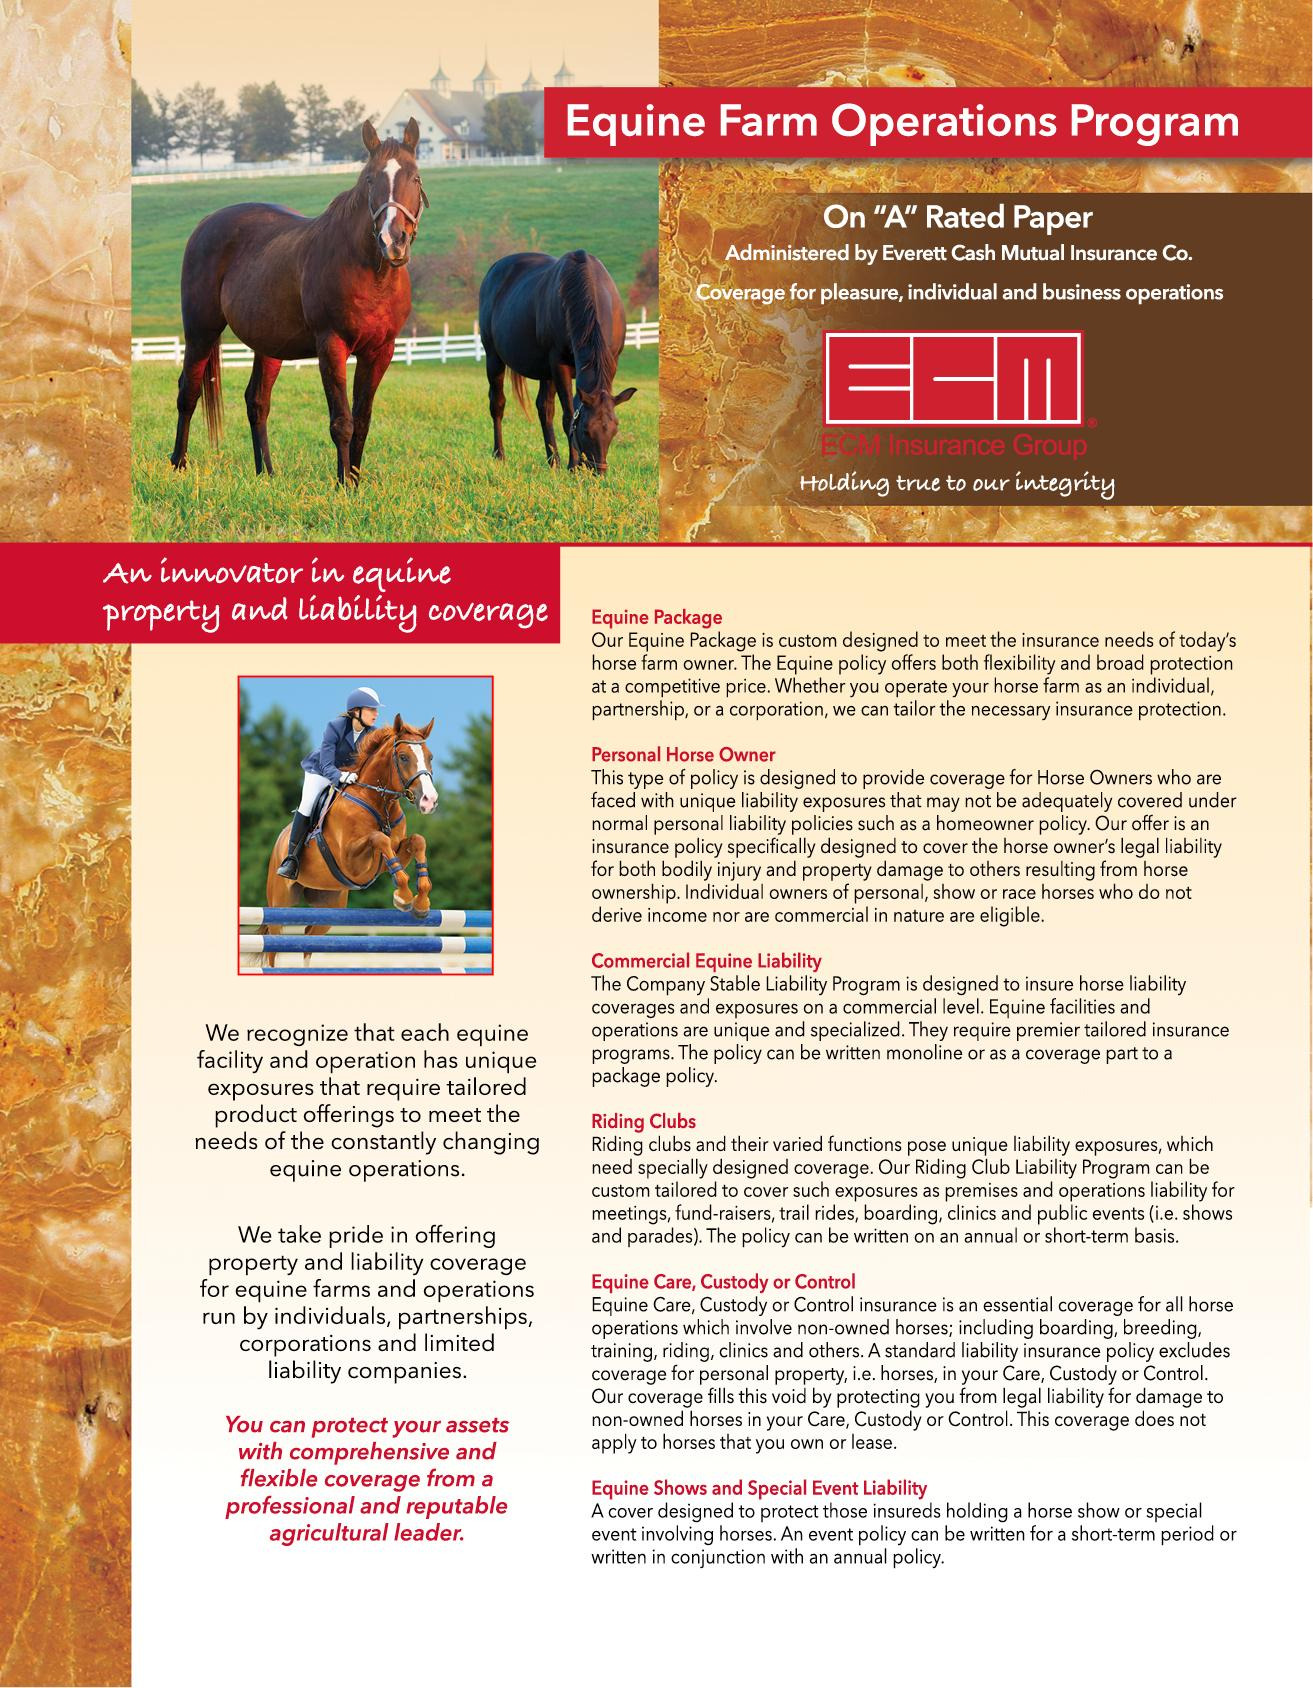 Equine Farm Operations brochure